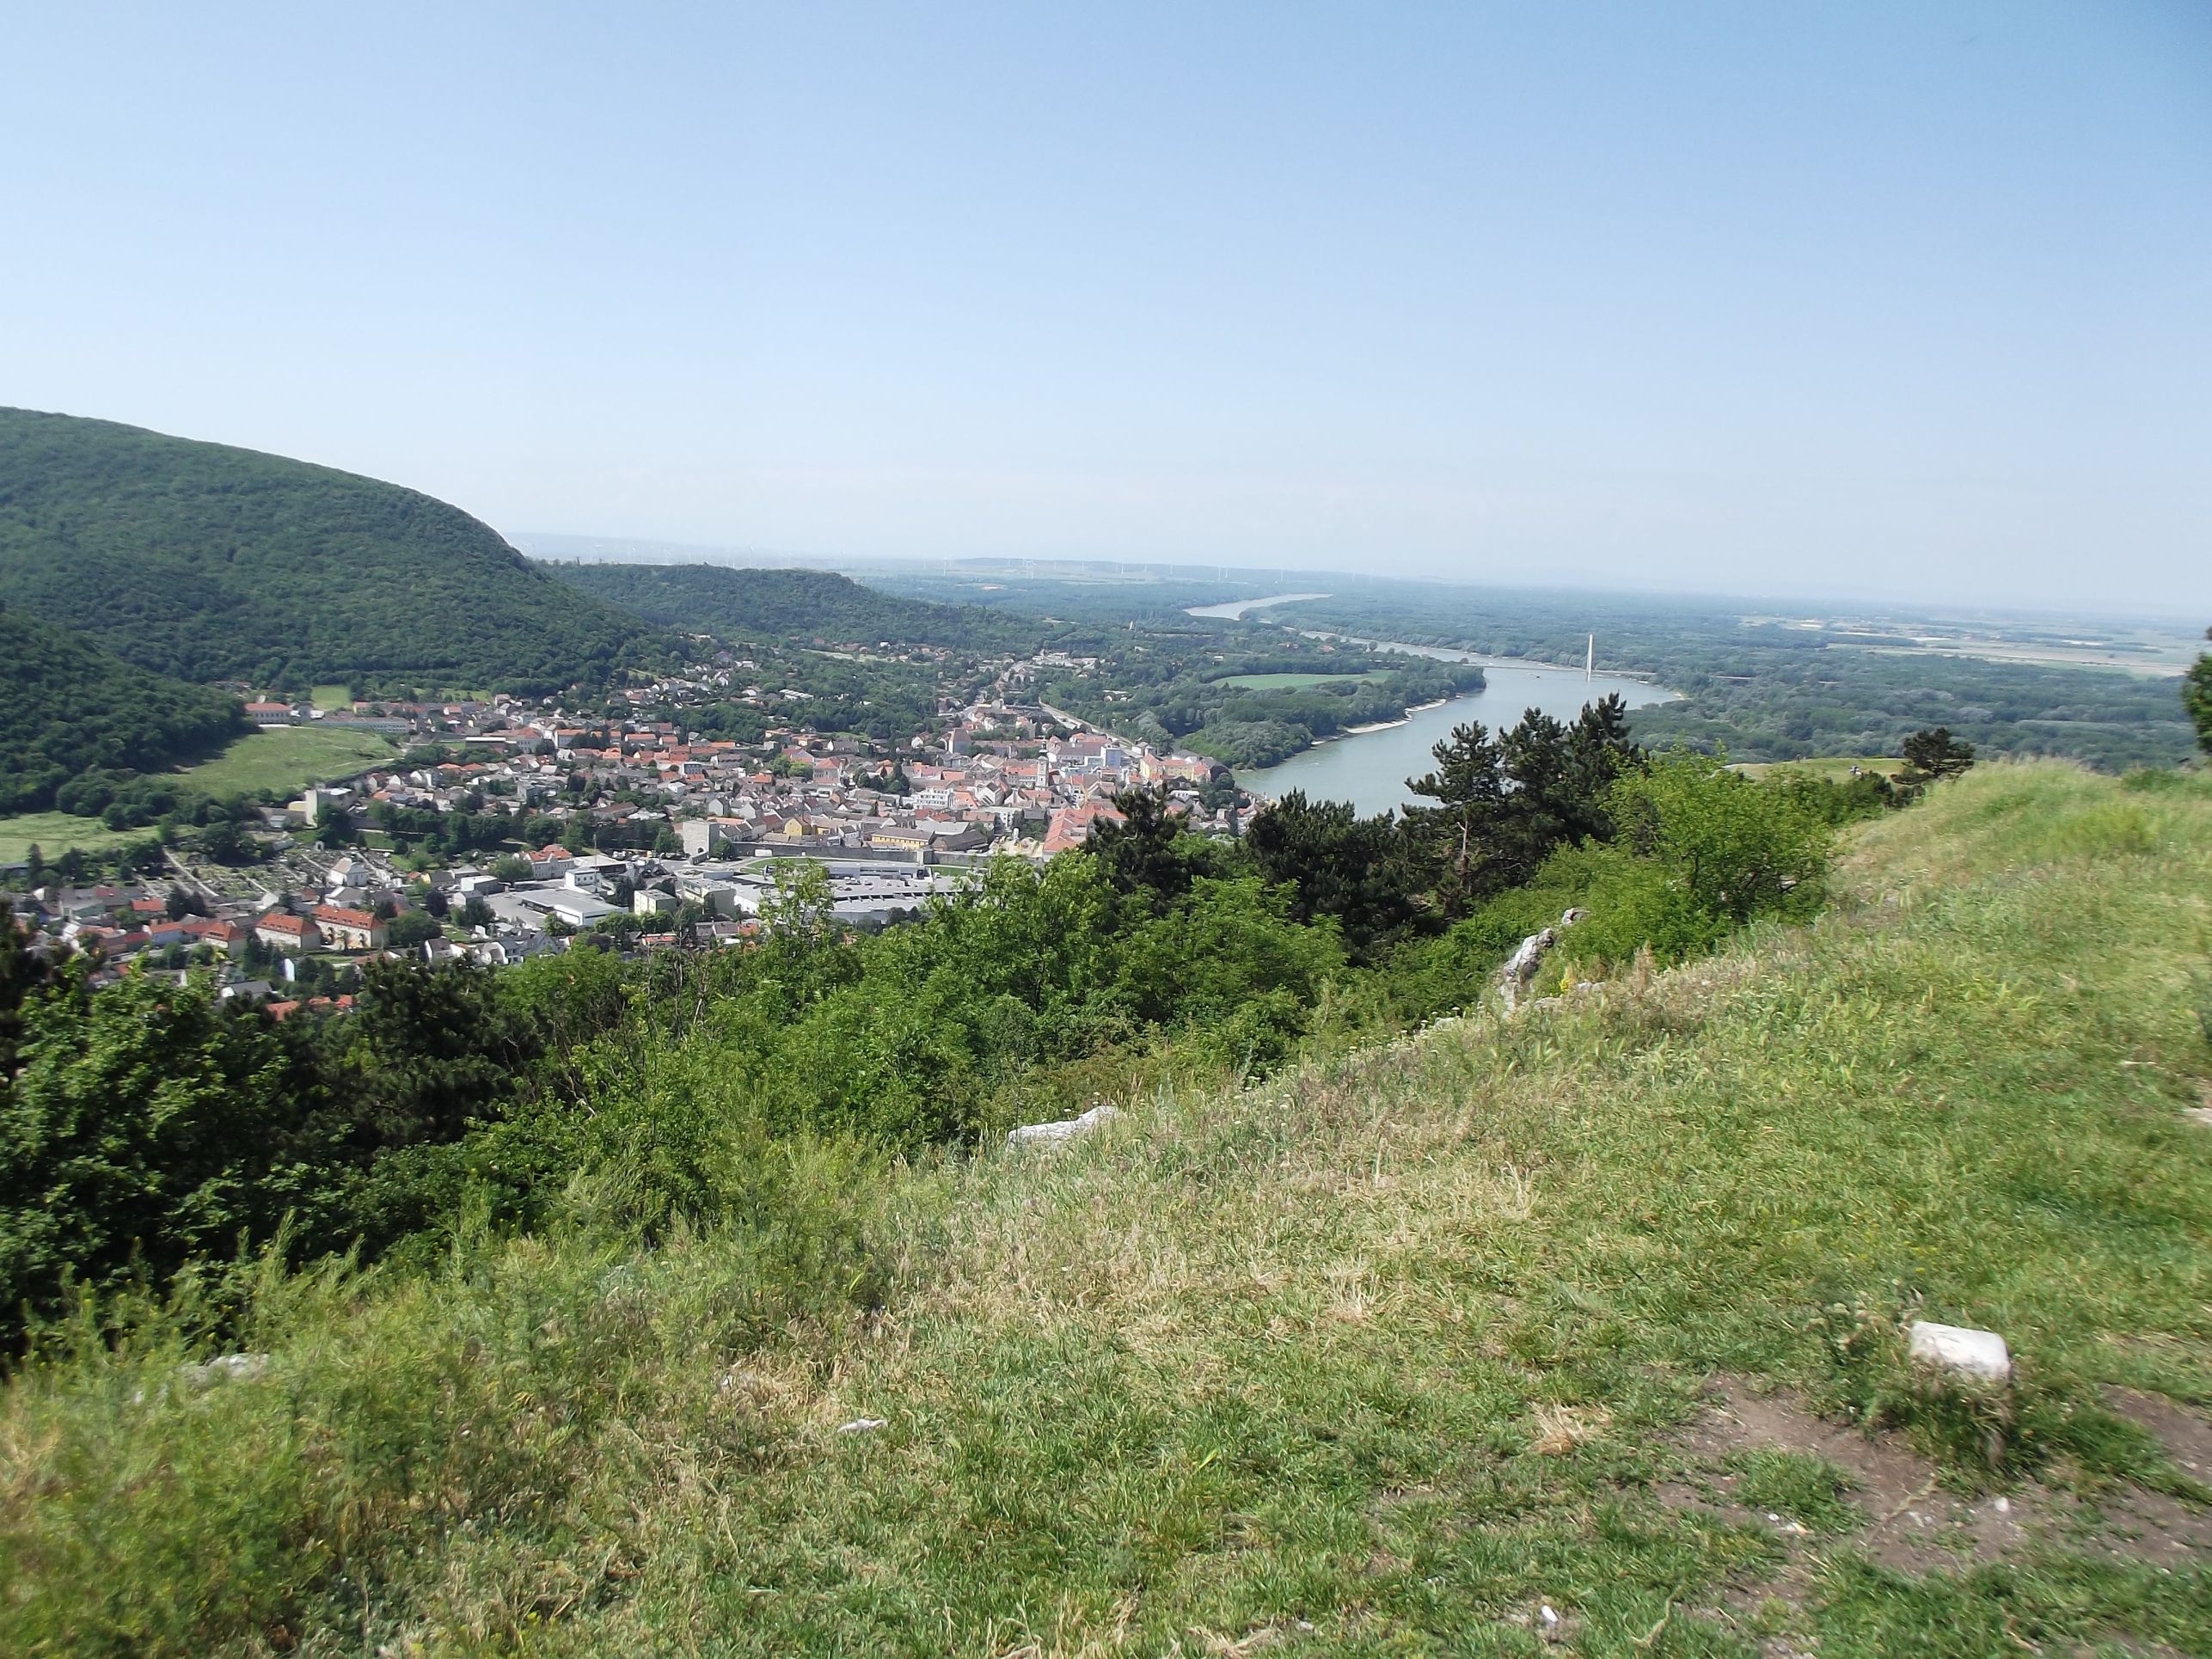 Hainburg és a Duna a Braunsbergről